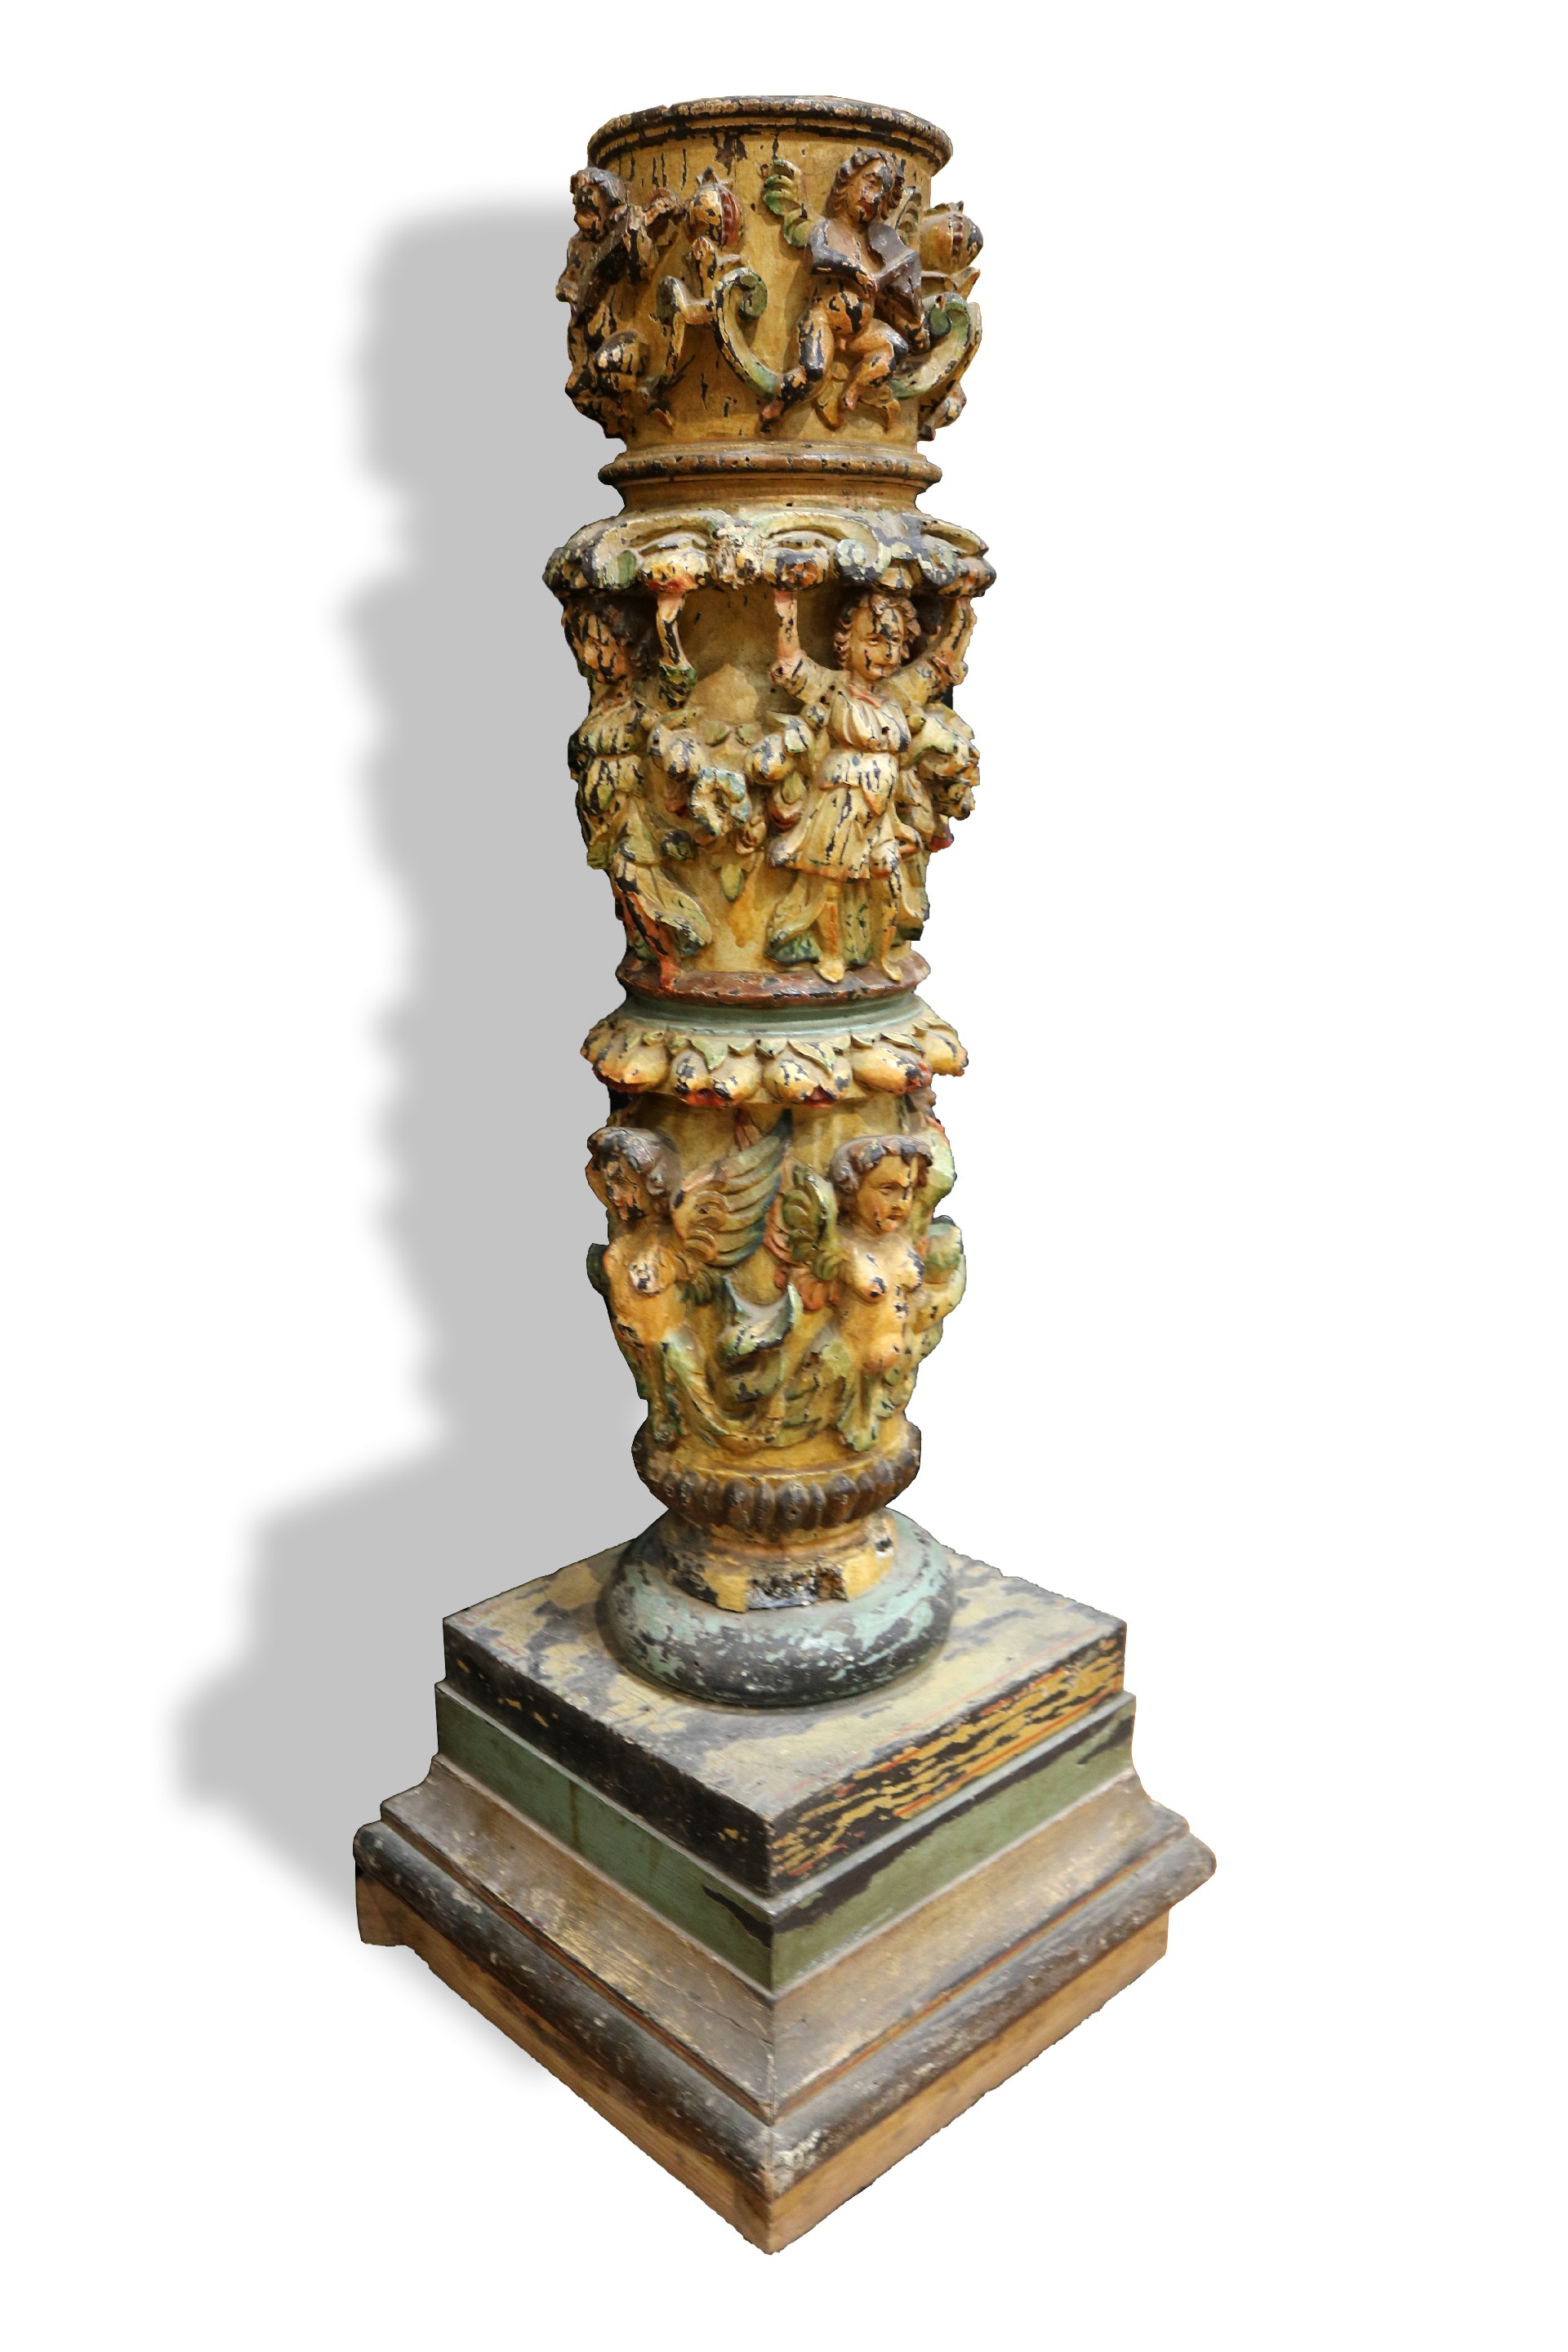 Antica colonna in legno dipinta. Epoca 1600. - 1